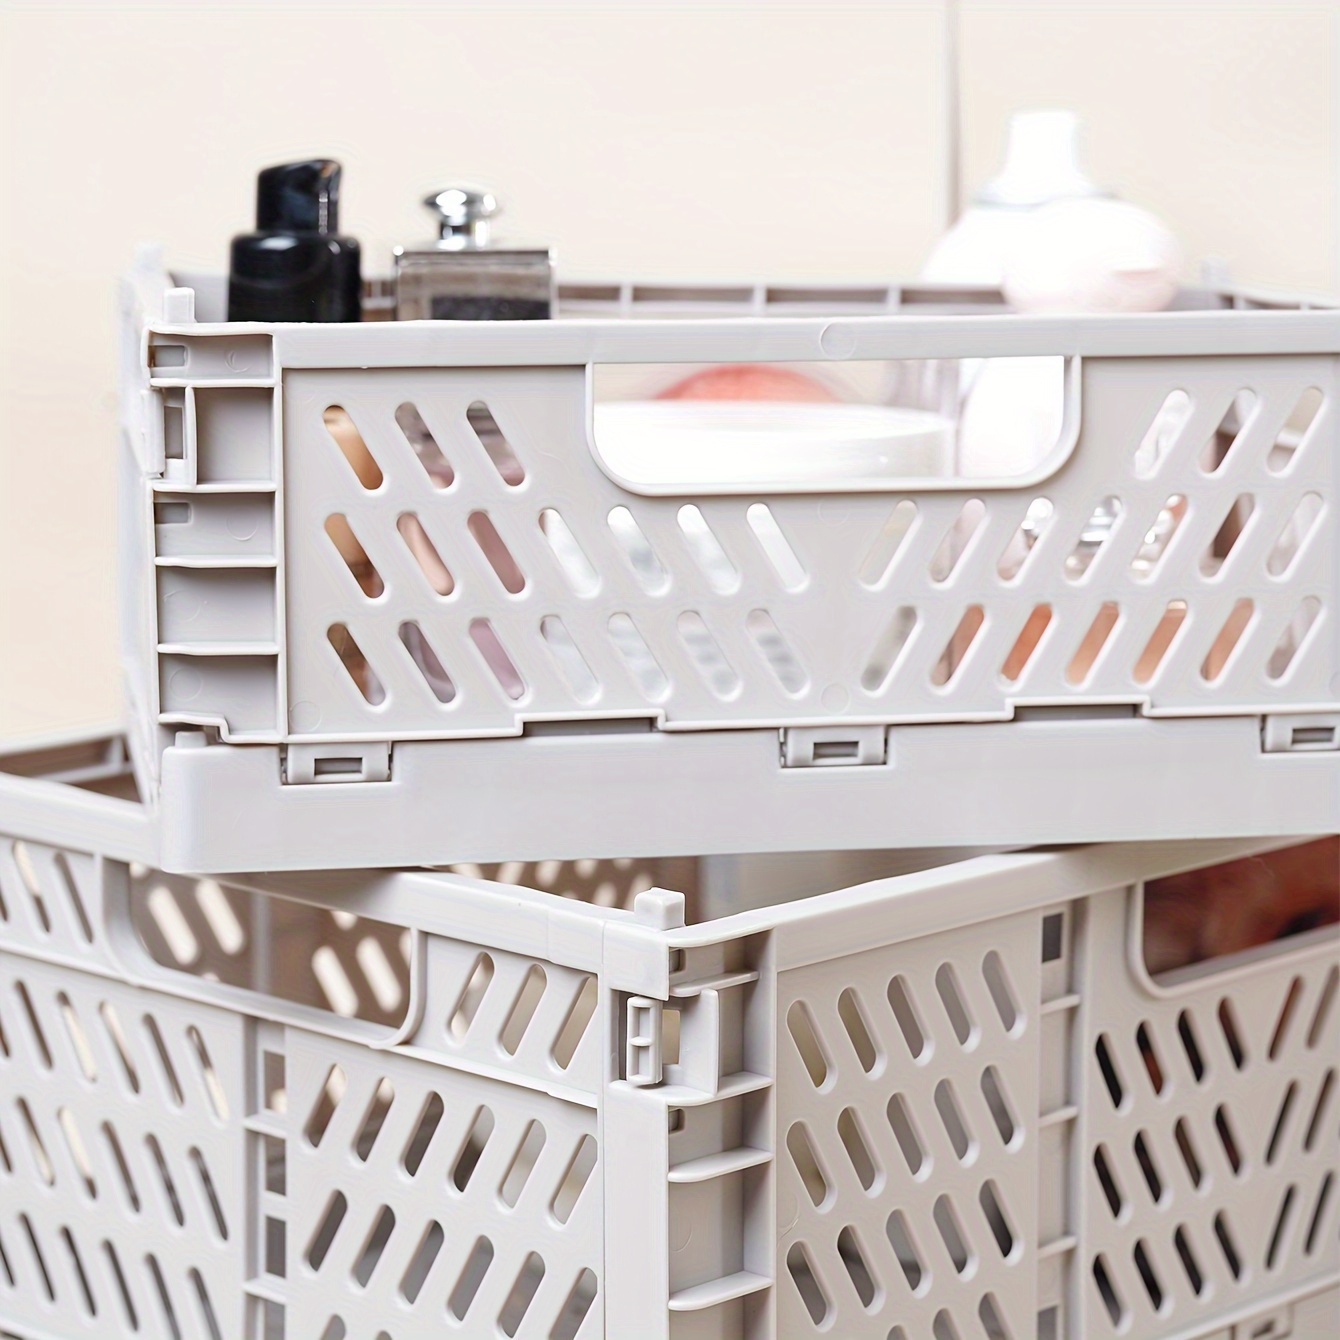  JiatuA Plastic Storage Basket with Handle Portable